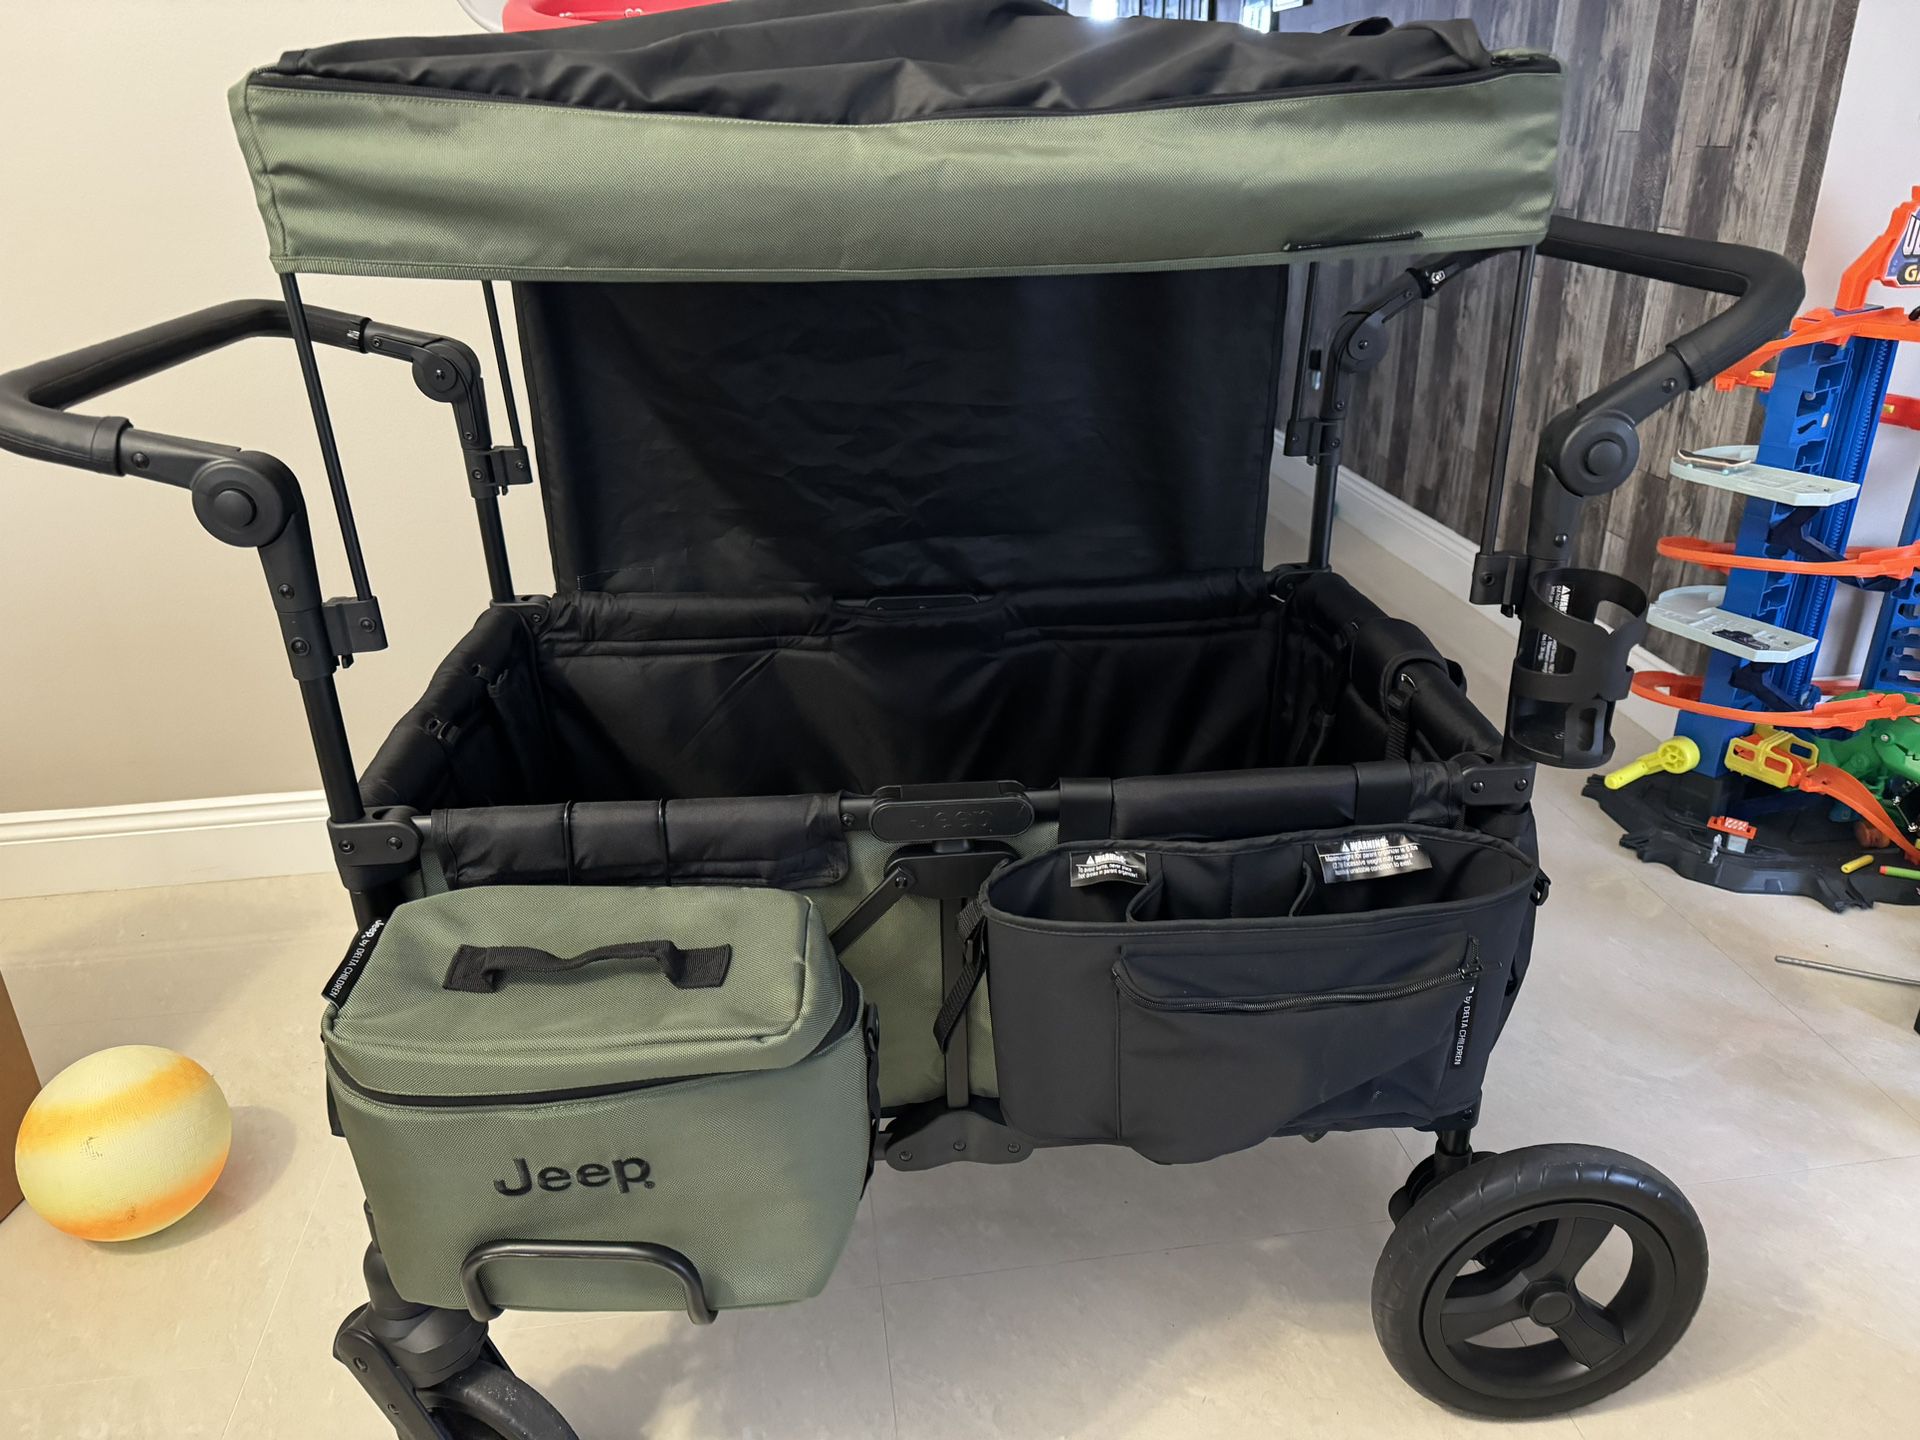 Jeep Delux Wrangler Stroller Wagon 